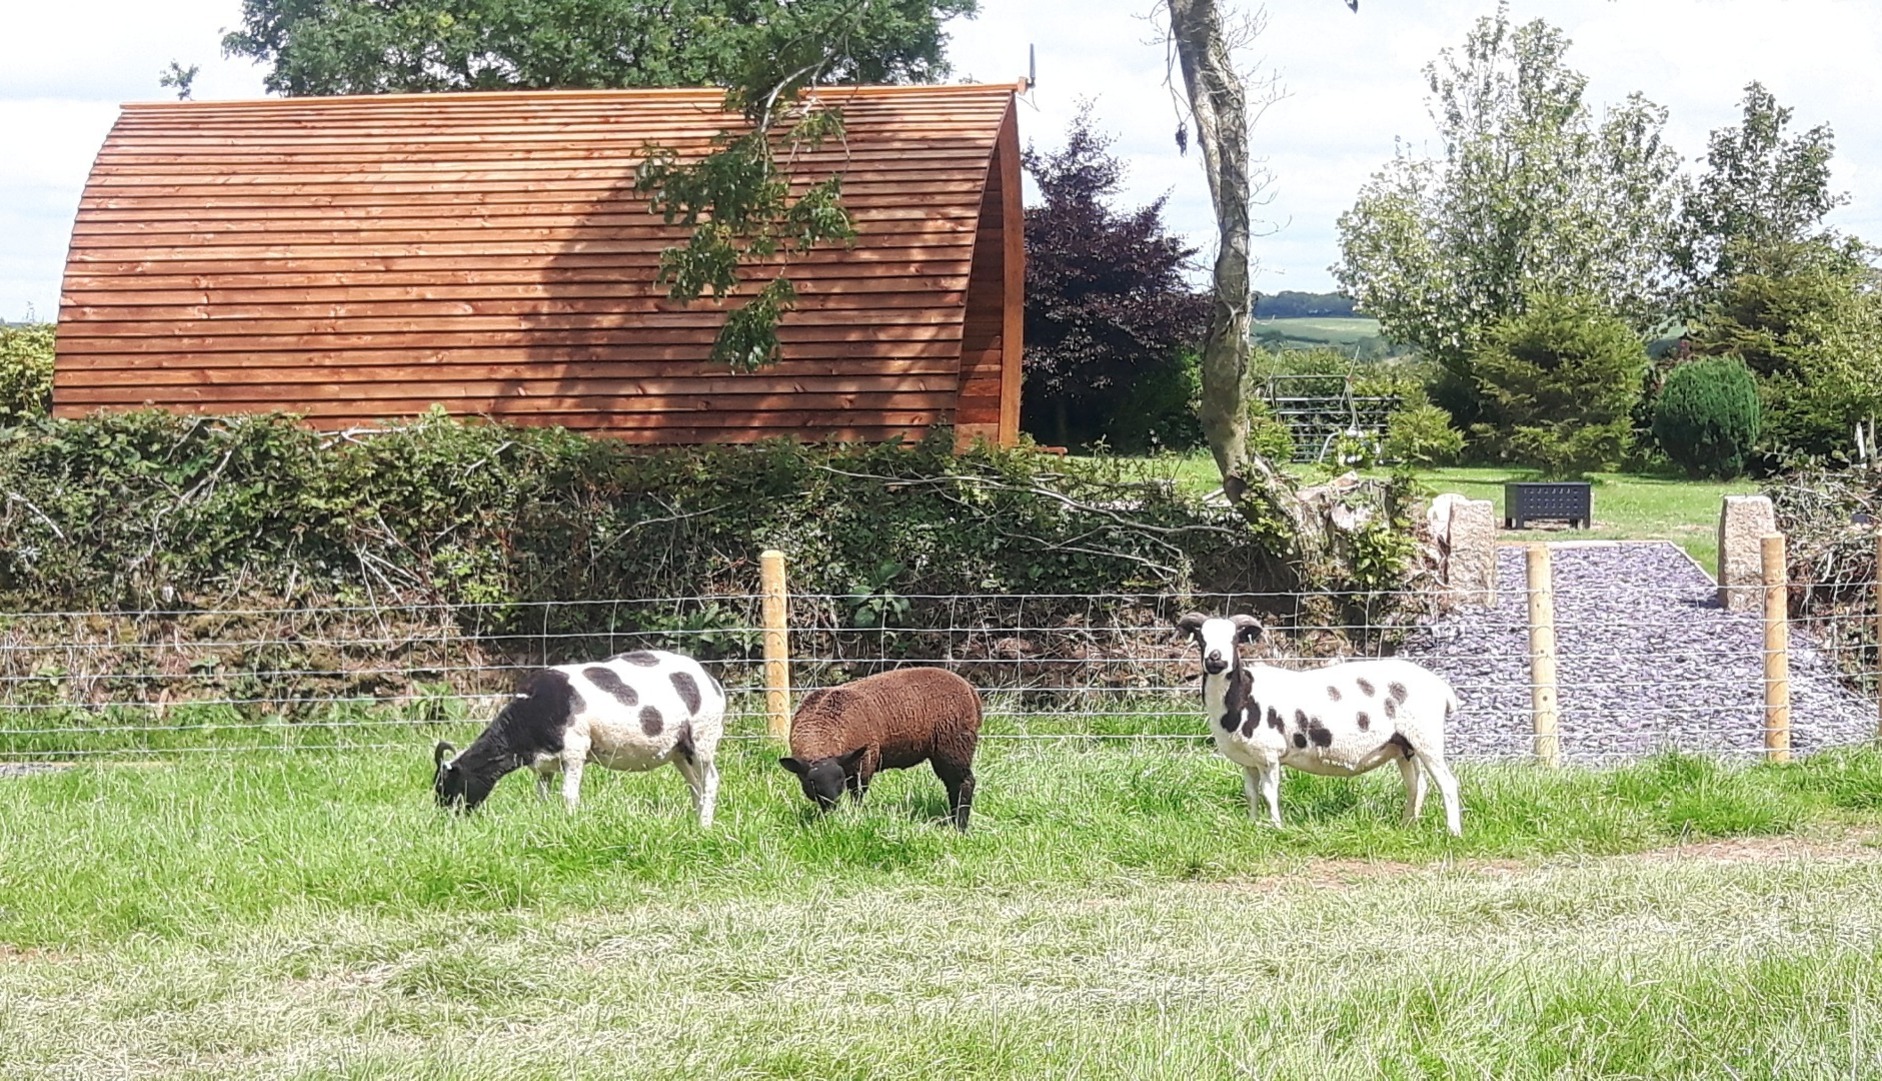 The locals at Larkworthy Farm